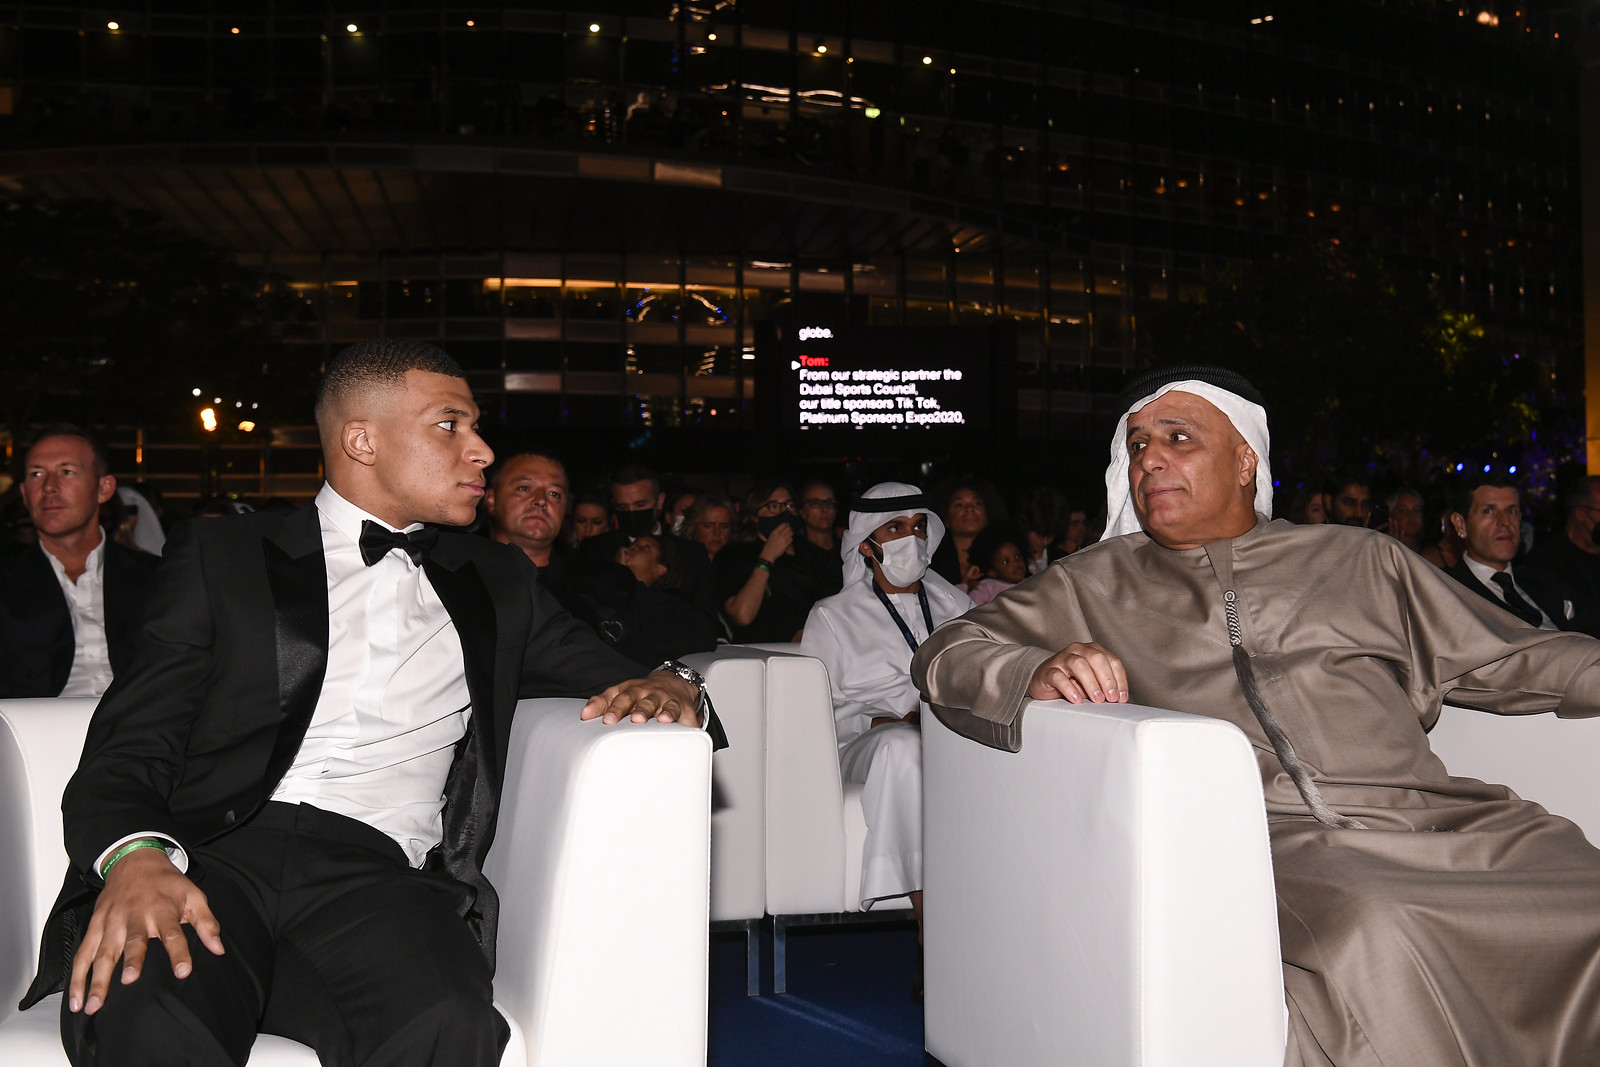 Dubai Globe Soccer Awards 2021 - Tredicesima Edizione.